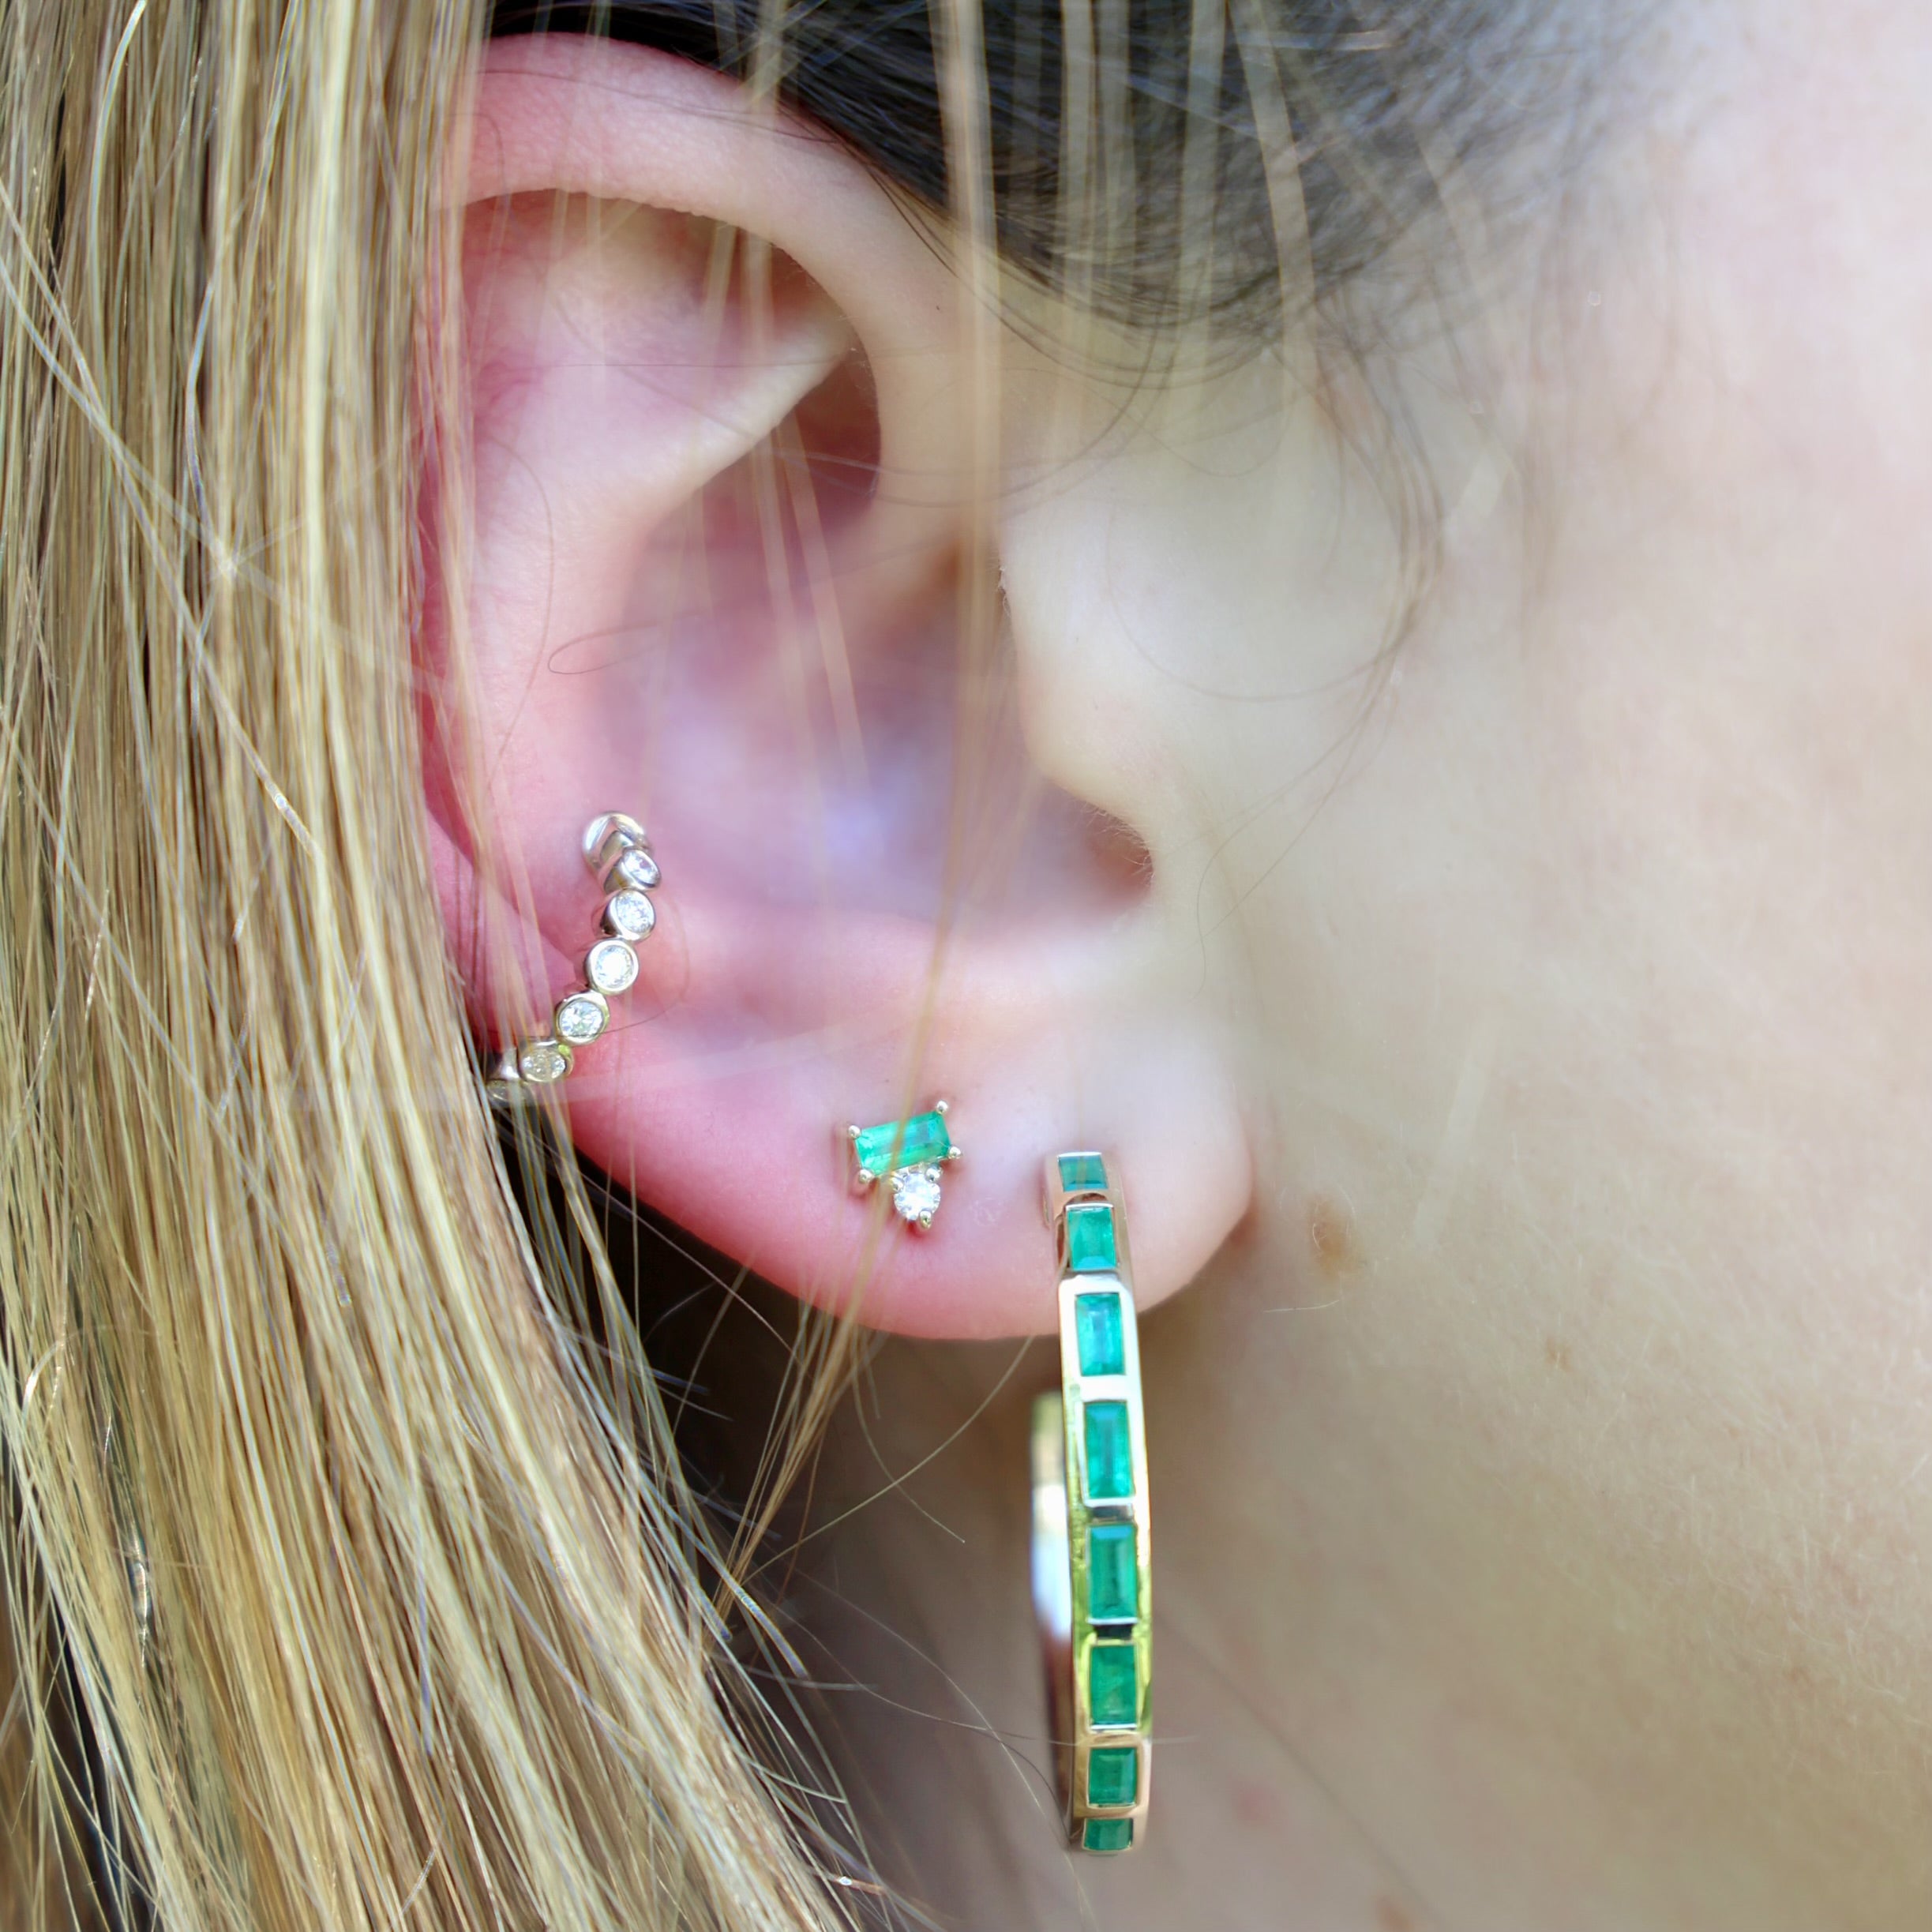 Emerald Baguette and Diamond Stud Earrings